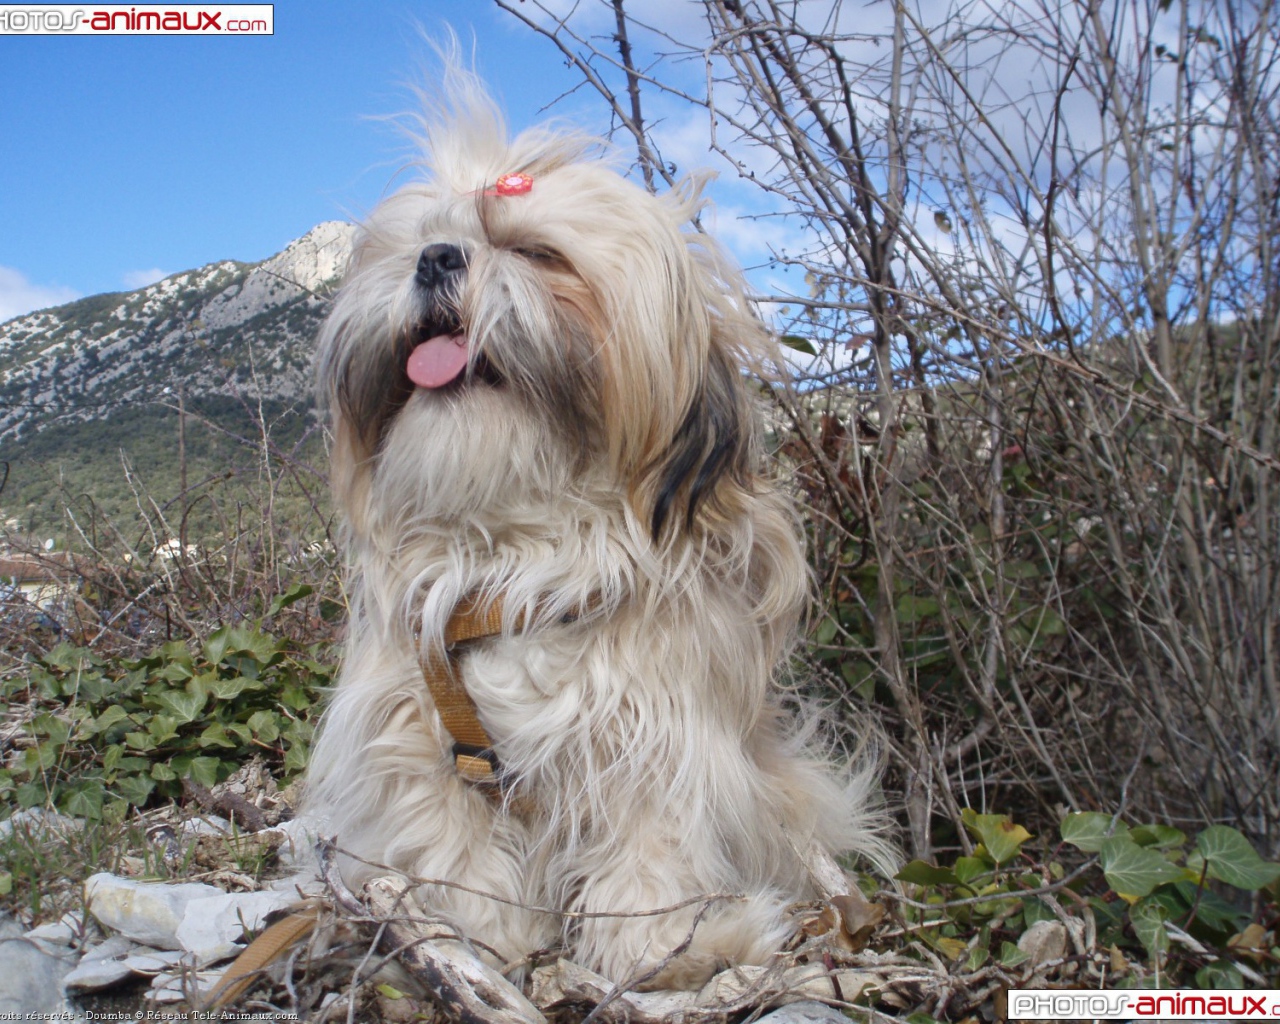 Shih Tzu dog on a background of mountains